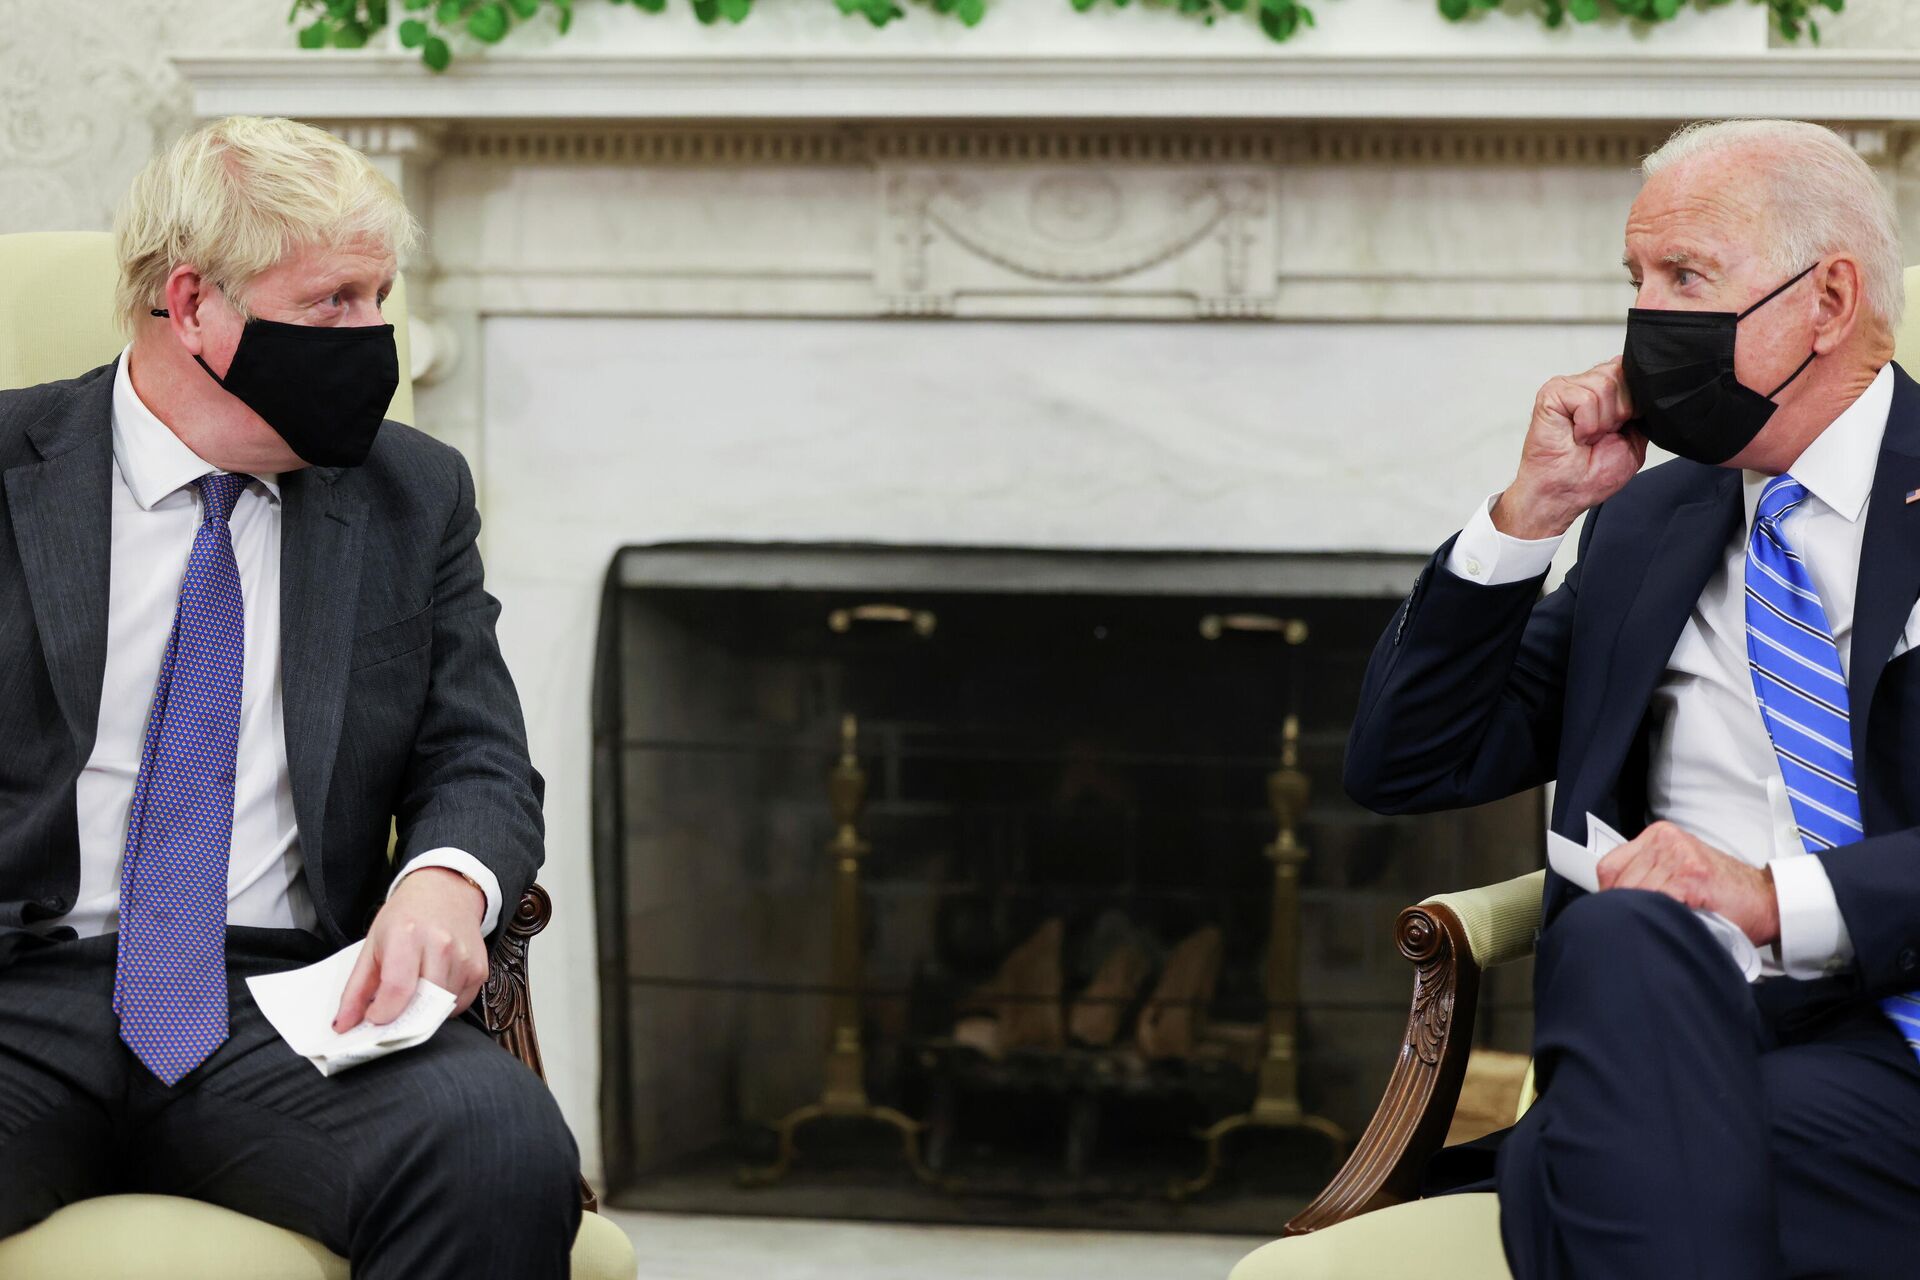 US President Joe Biden and British Prime Minister Boris Johnson hold a bilateral meeting in the Oval Office at the White House in Washington, US, September 21, 2021 - Sputnik International, 1920, 22.09.2021